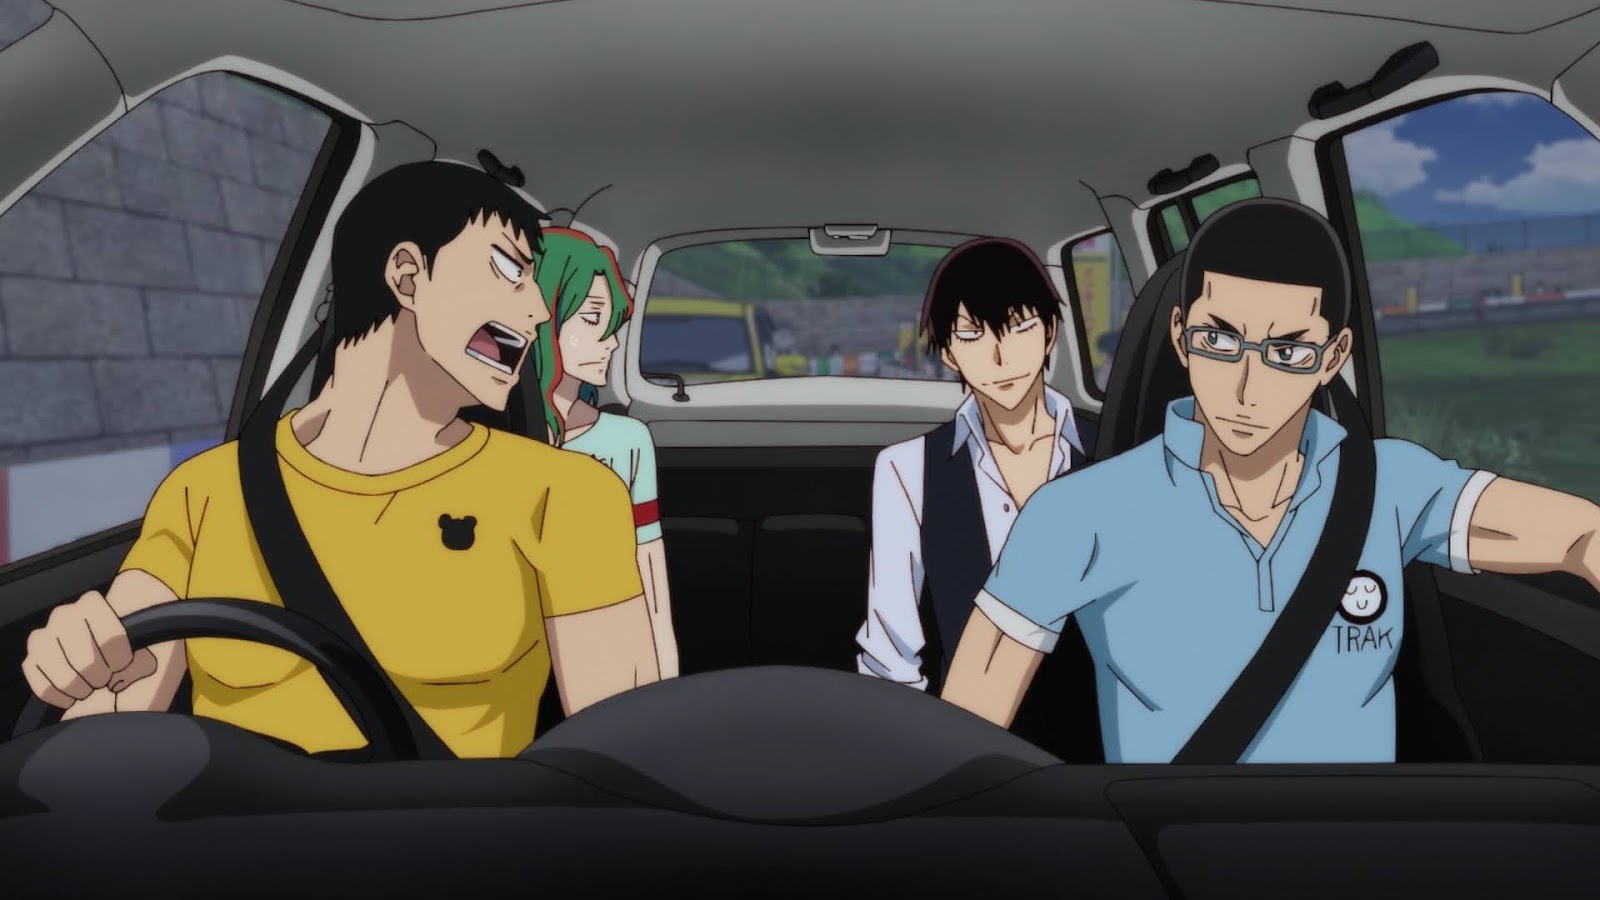 Joeschmo's Gears and Grounds: Yowamushi Pedal - Limit Break - Episode 18 -  10 Second Anime